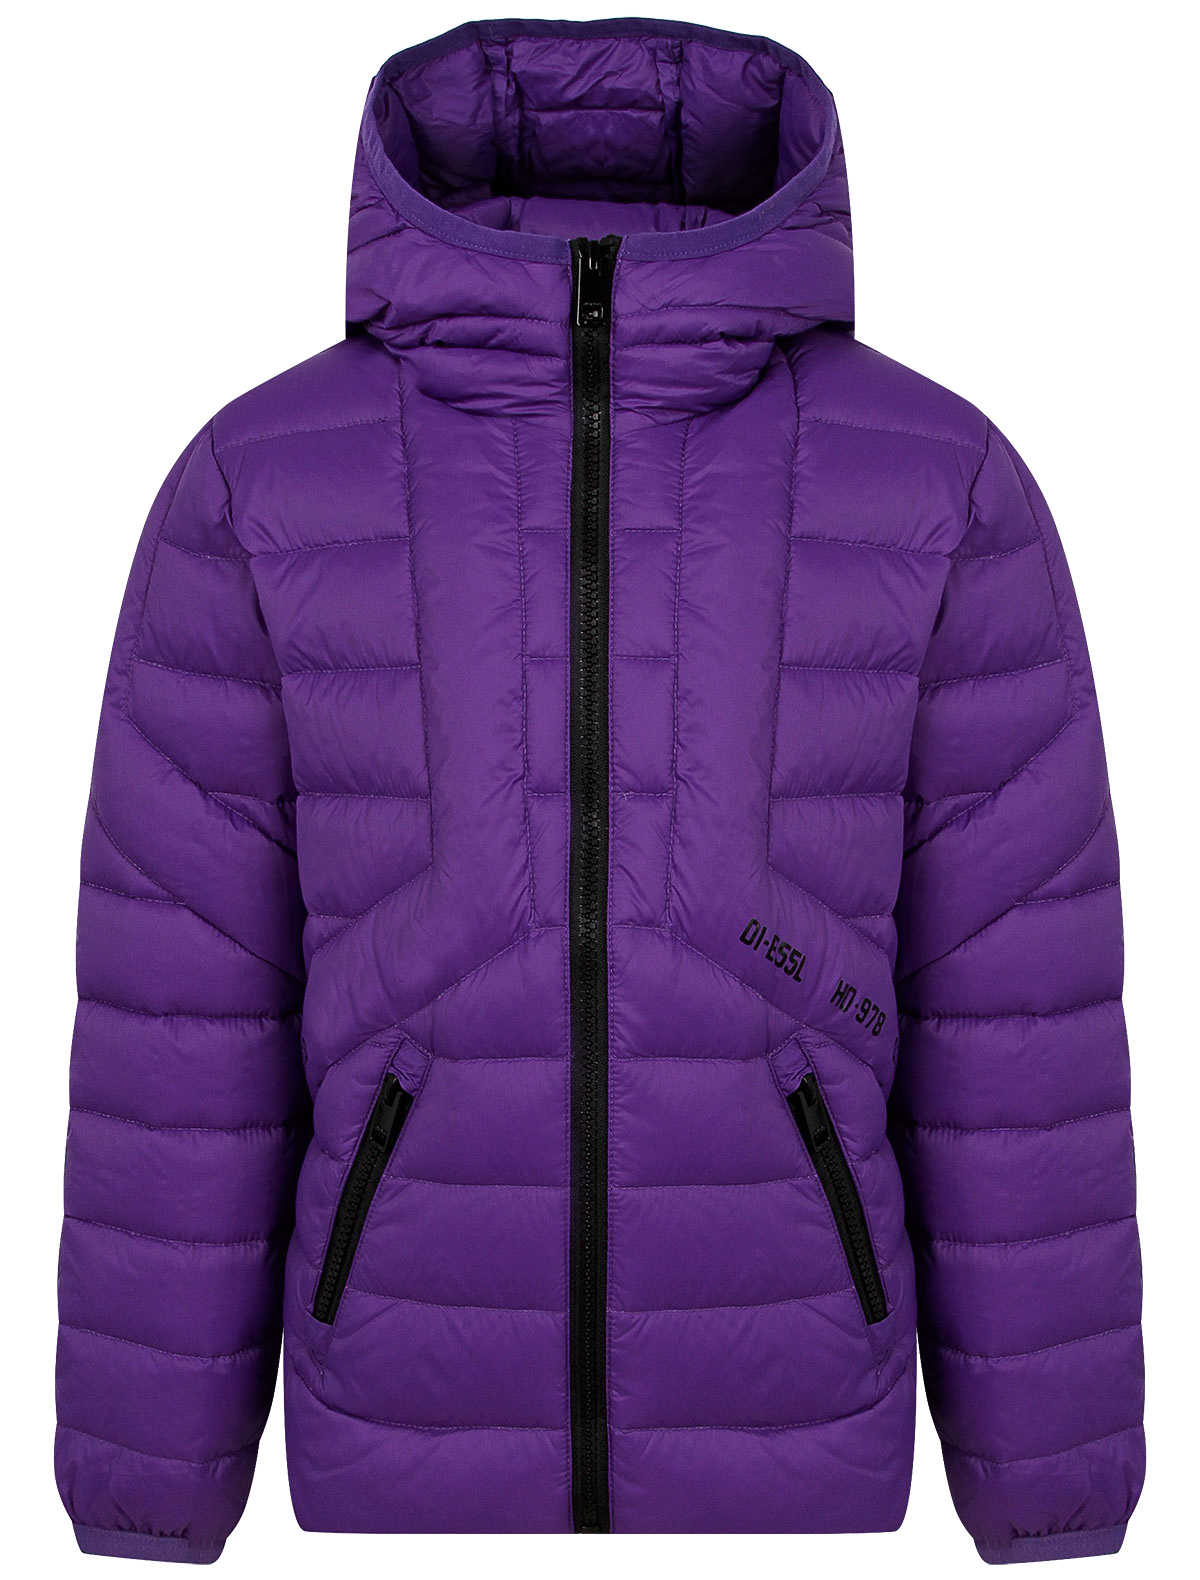 Куртка Diesel 2345493, цвет фиолетовый, размер 11 1074529181136 - фото 1